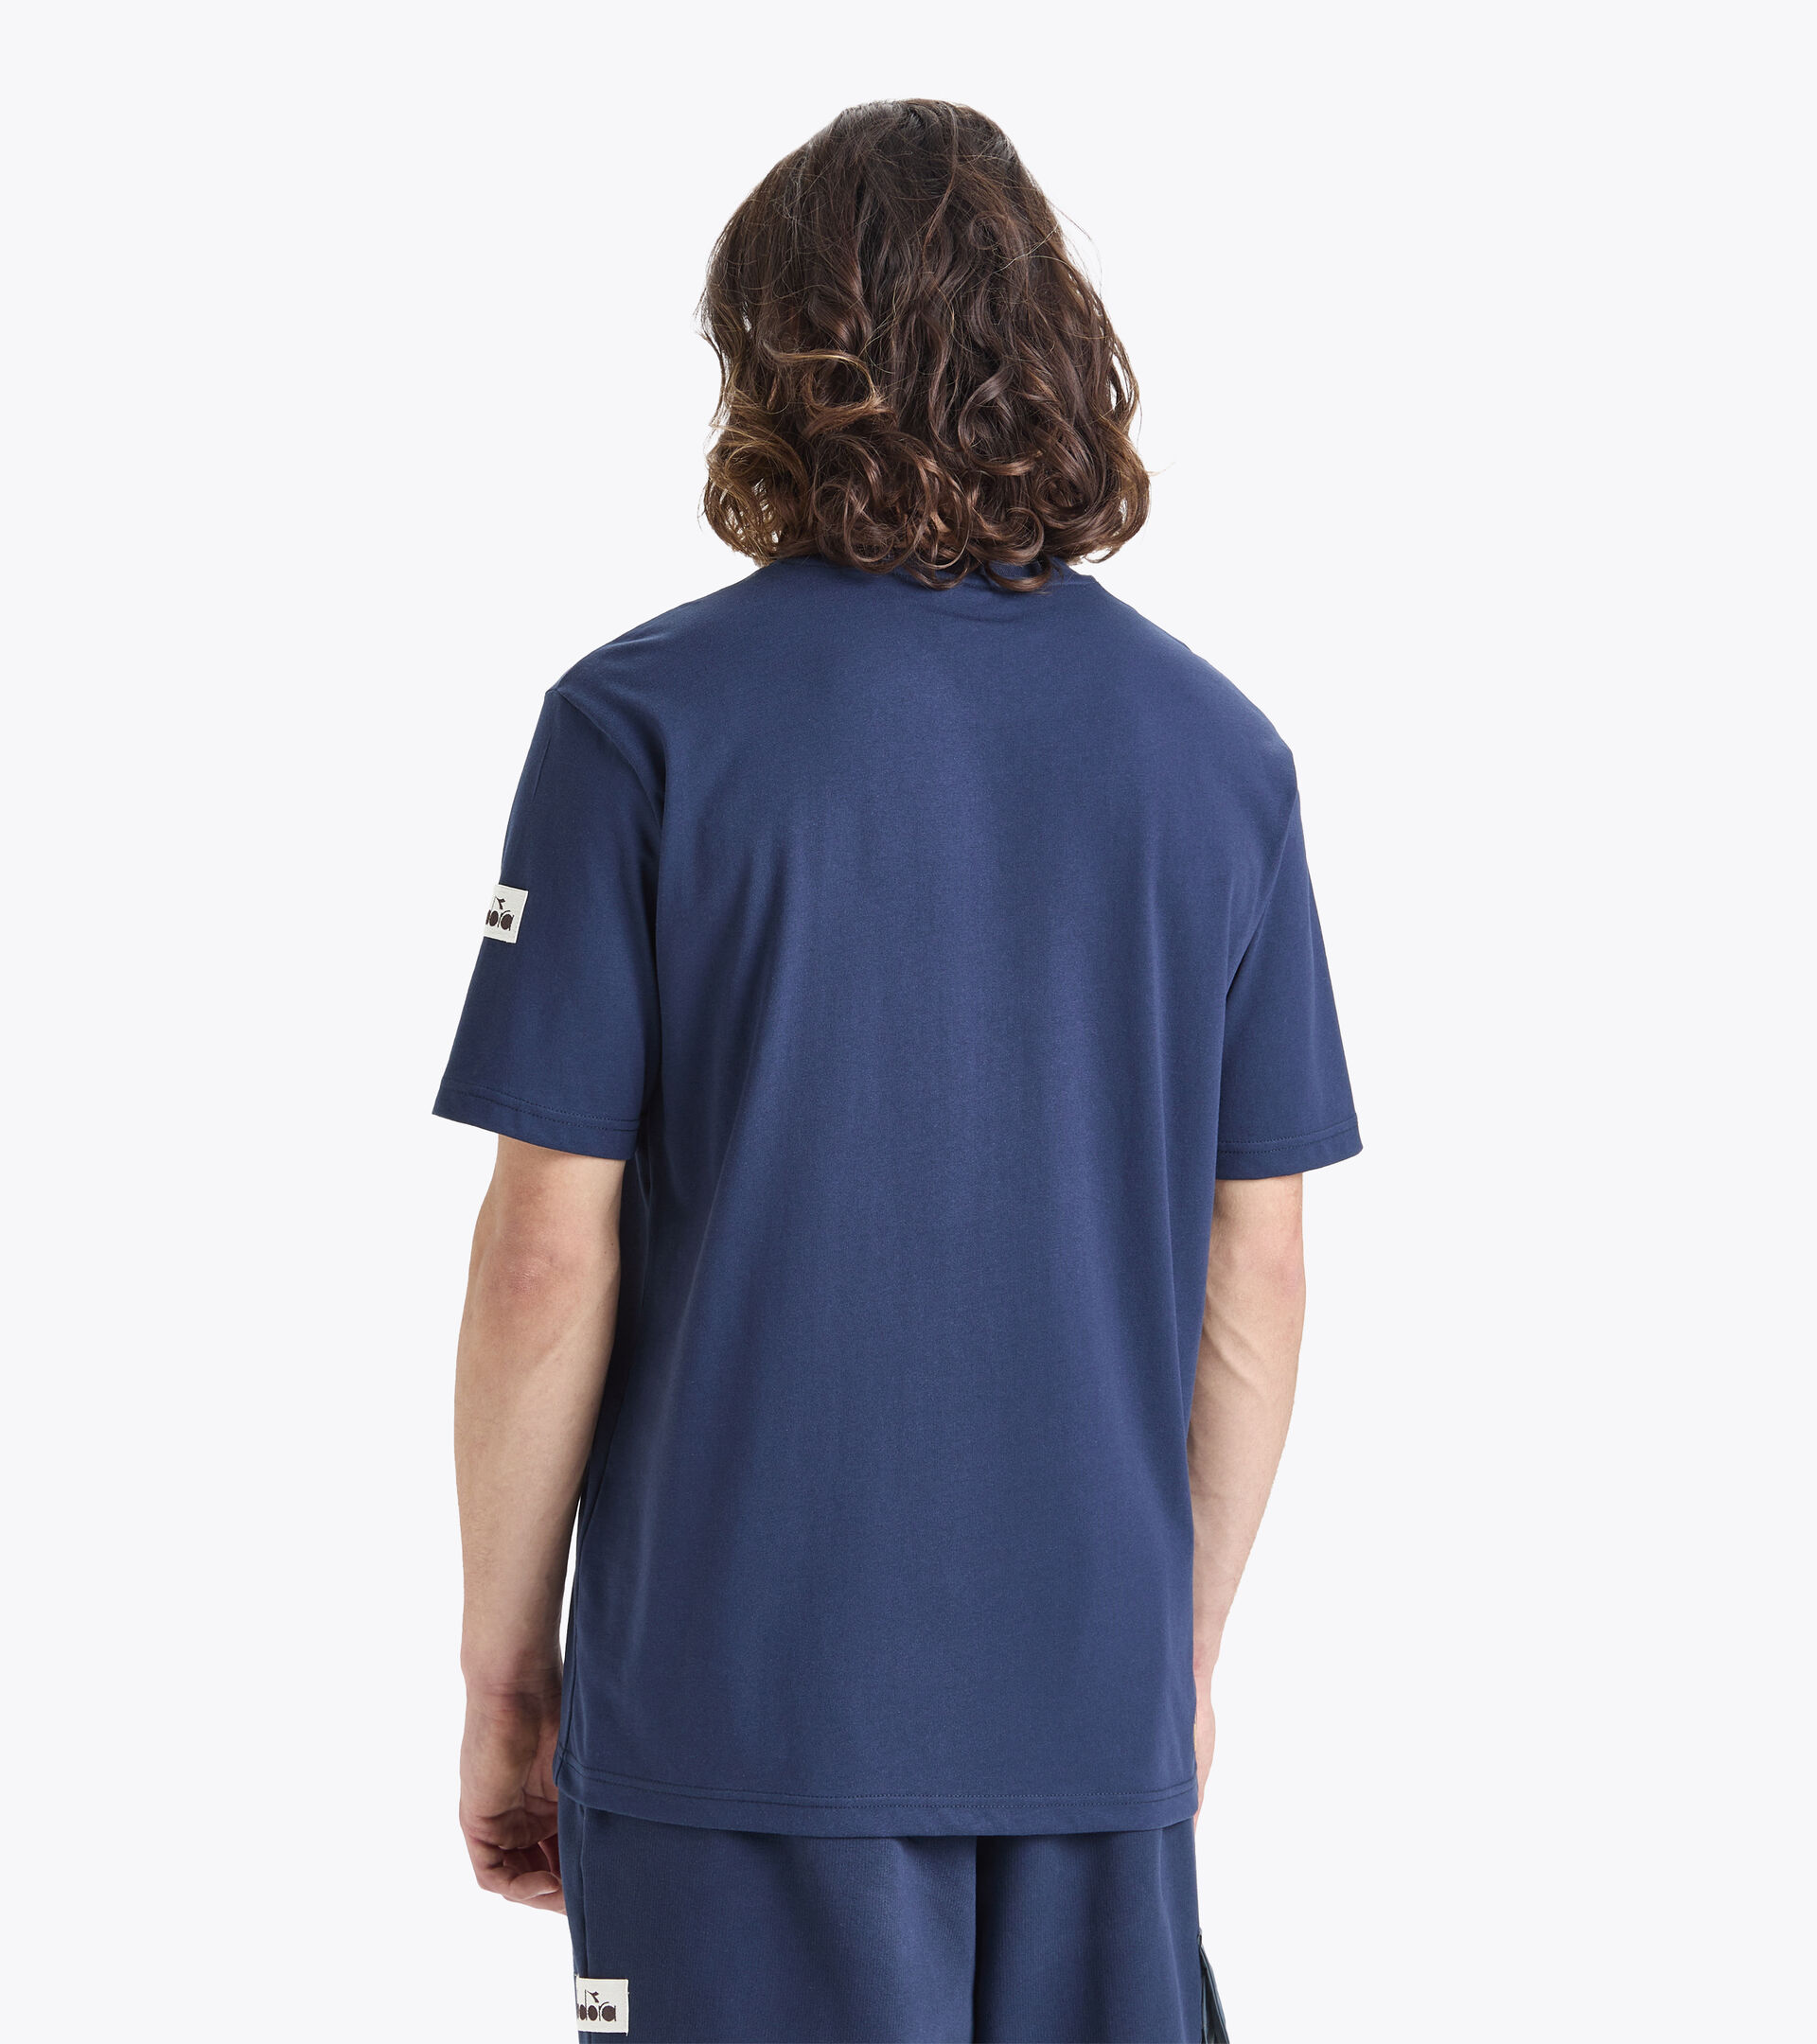 T-shirt - Made in Italy - Uomo T-SHIRT SS 2030 BLU CORSARO - Diadora